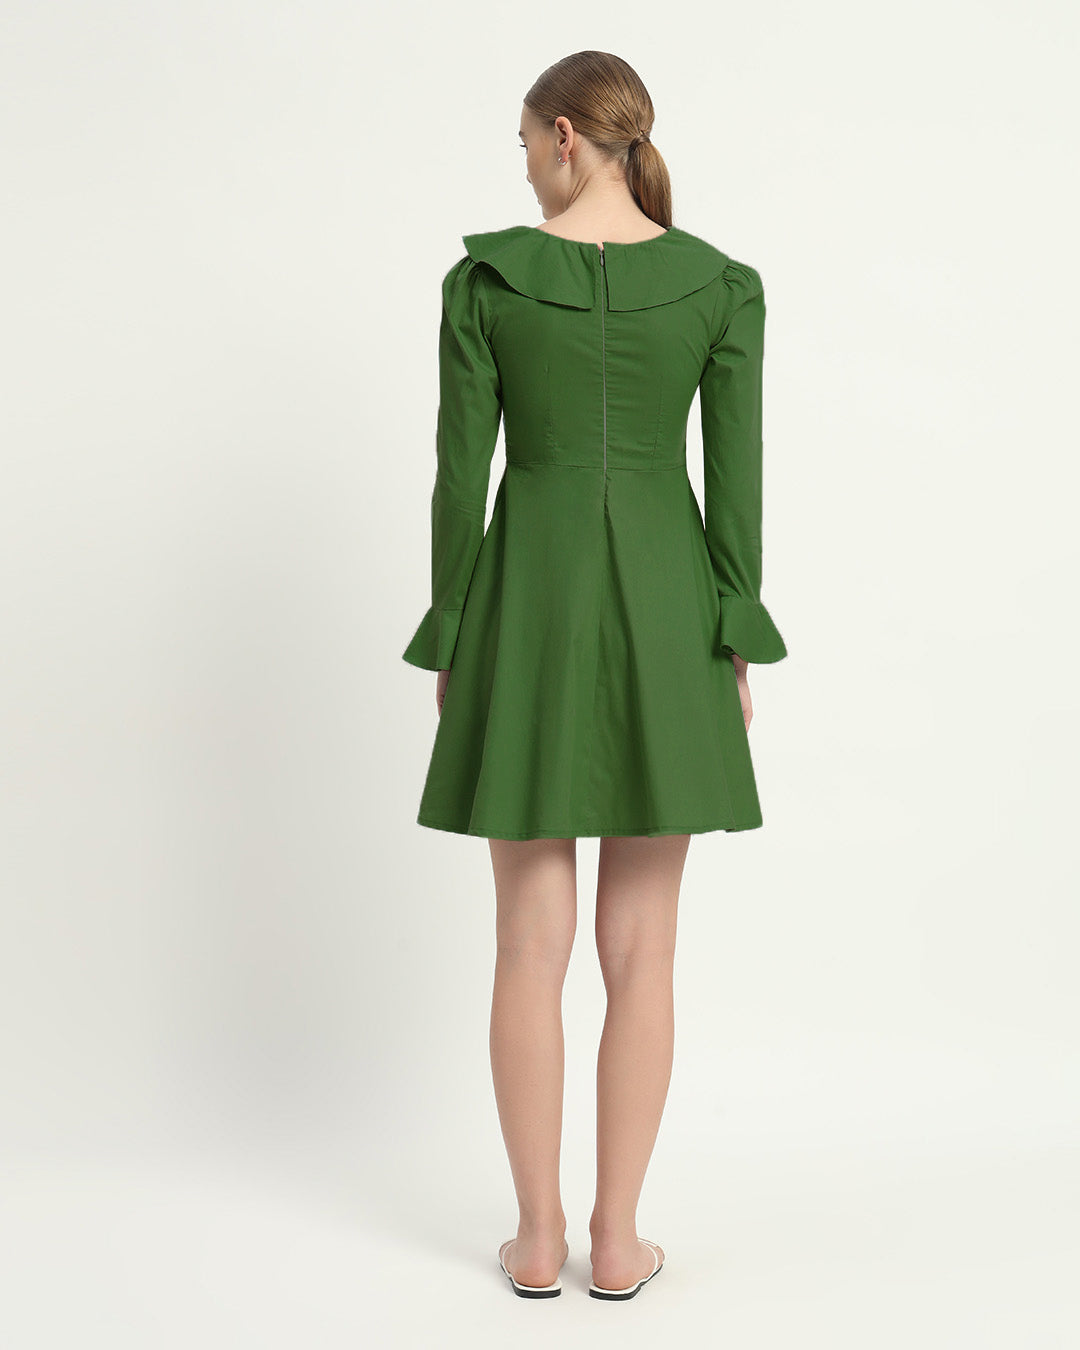 The Emerald Fredonia Cotton Dress